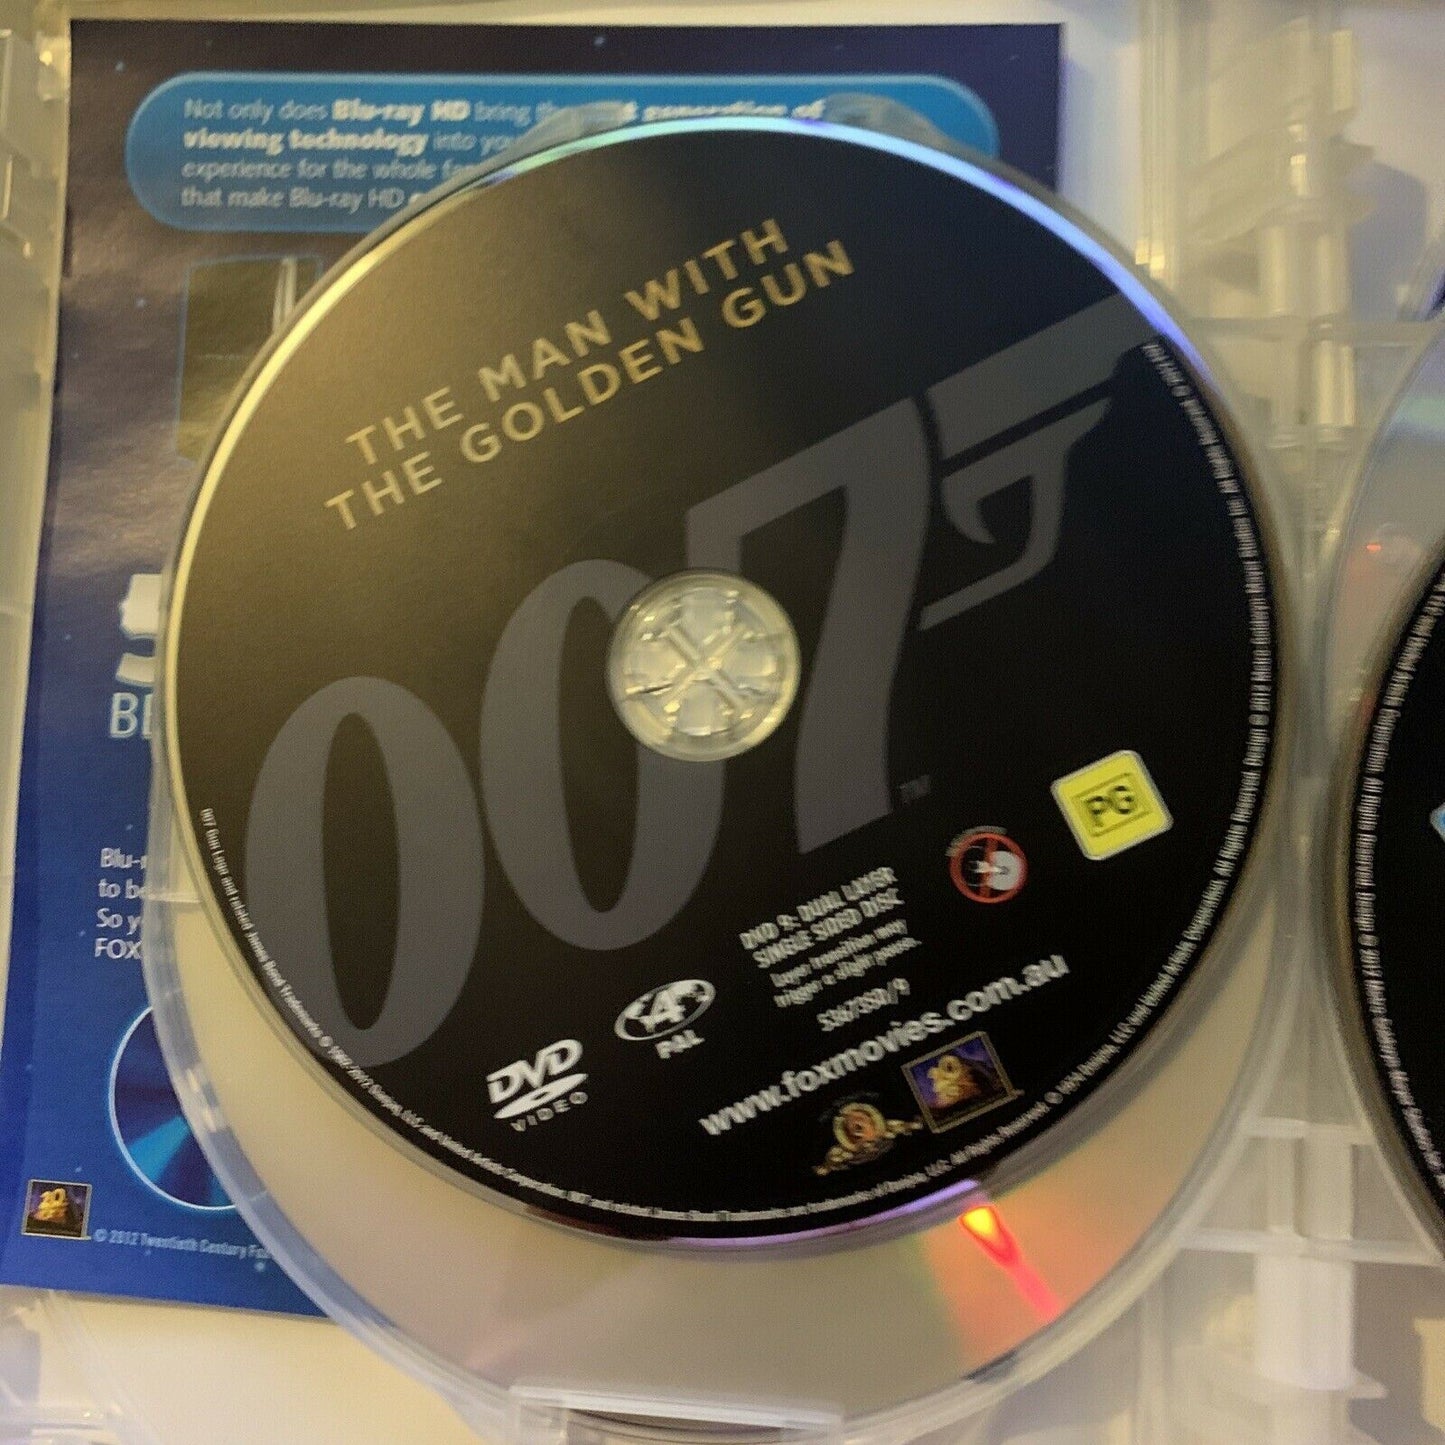 Roger Moore: 007 James Bond Collection (DVD, 1985, 7-Disc) Region 4